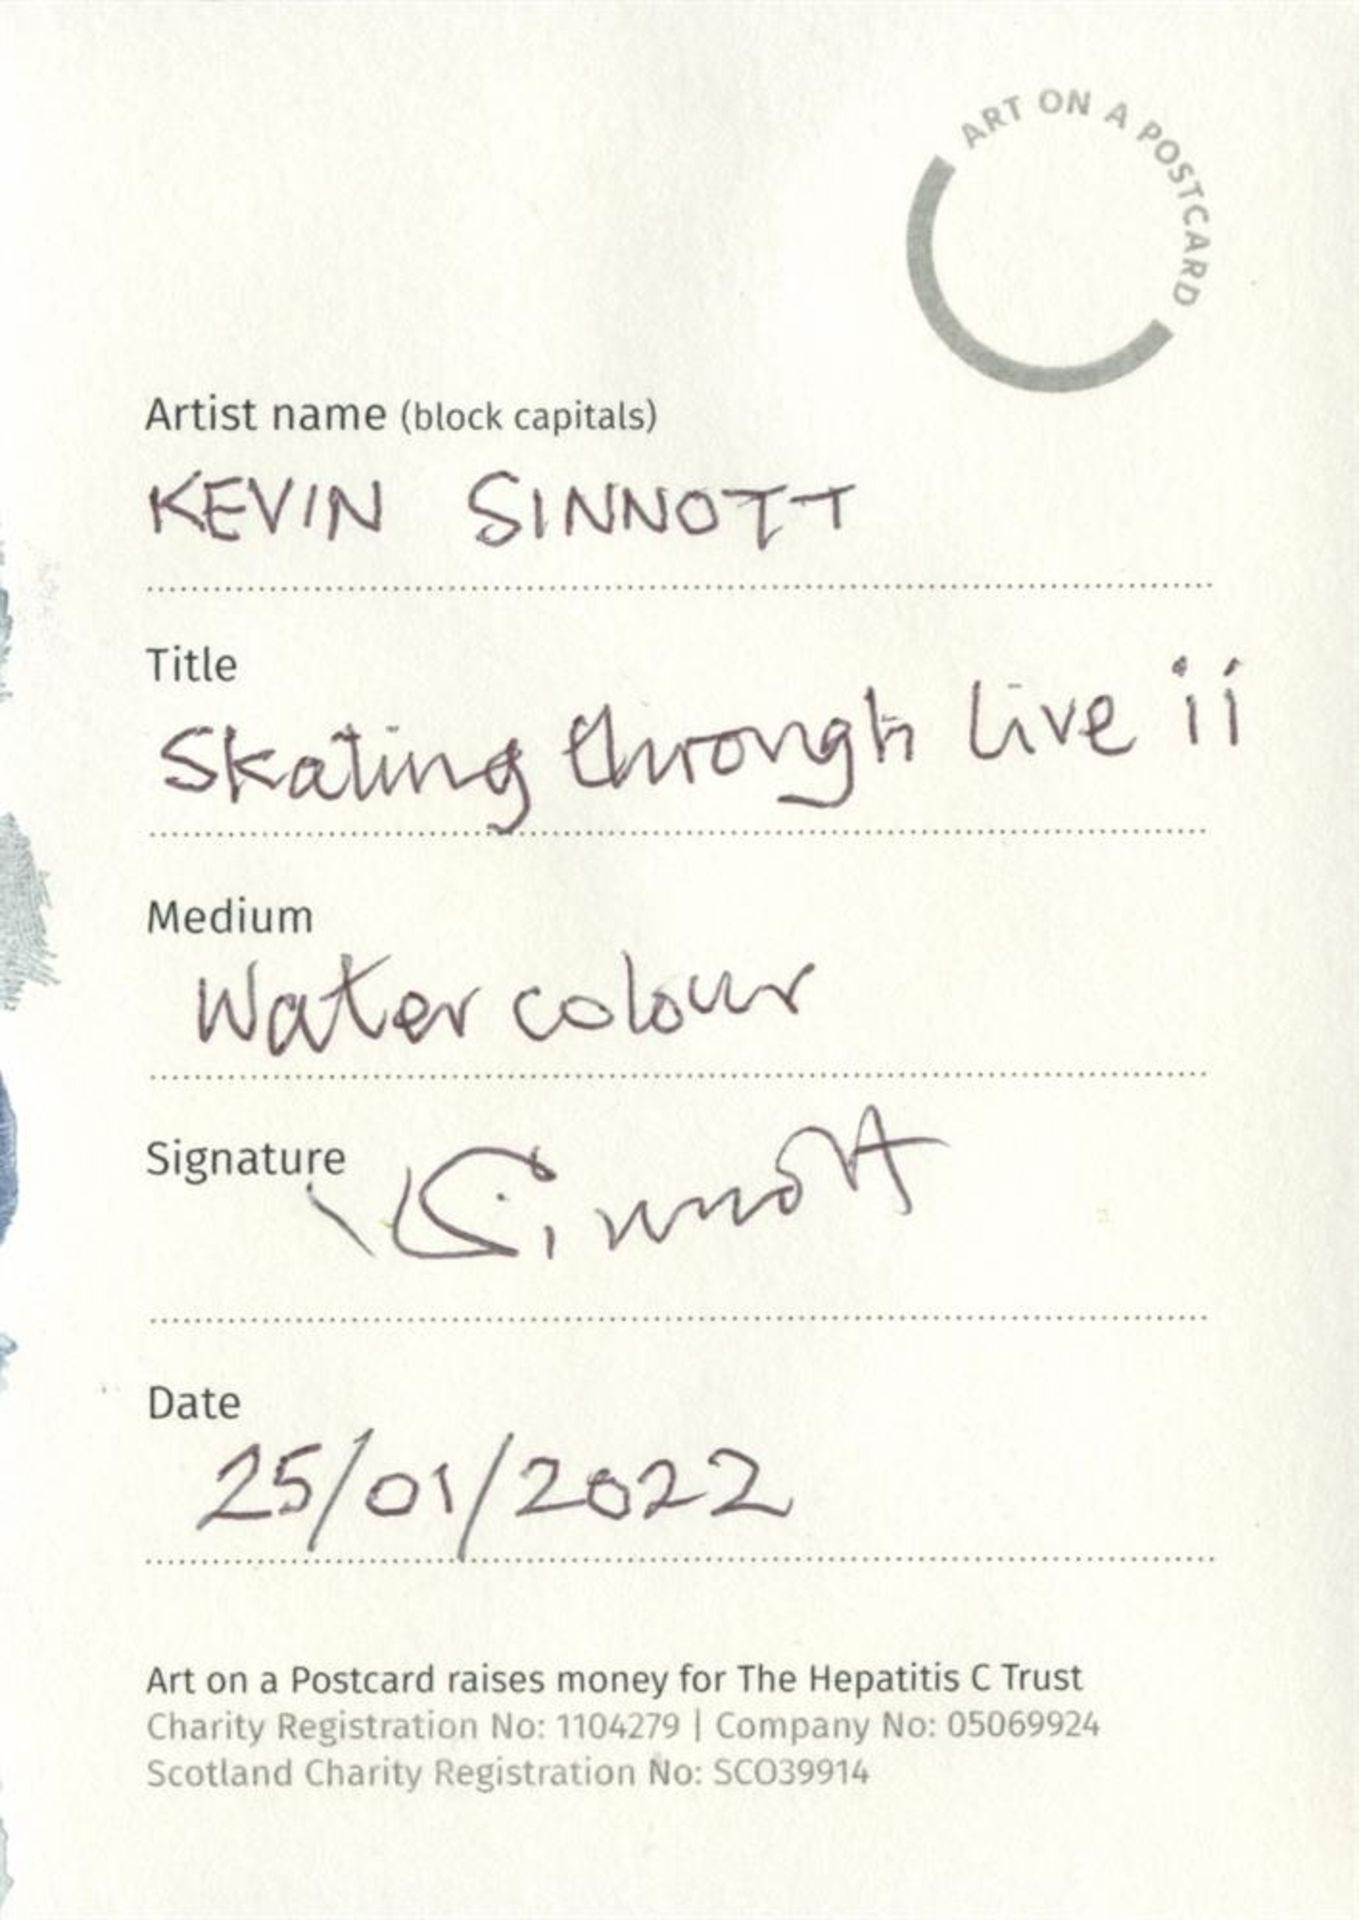 Kevin Sinnott, Skating Through Life ii, 2022 - Image 2 of 3